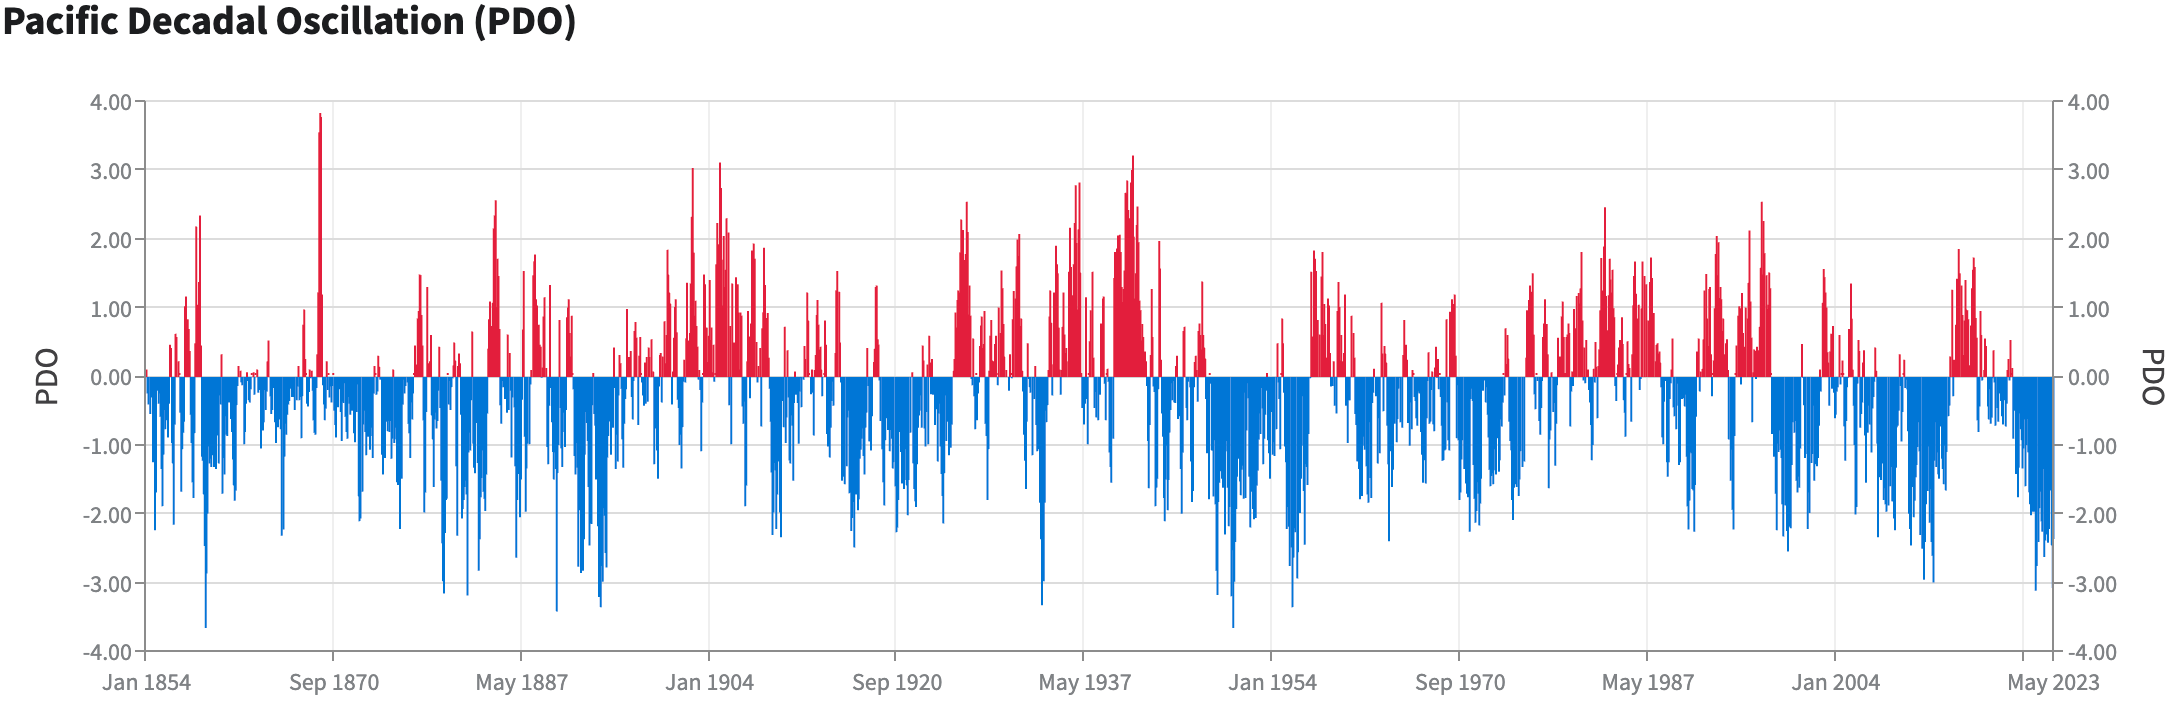 Pacific Decadal Oscillation Data from https://www.ncei.noaa.gov/pub/data/cmb/ersst/v5/index/ersst.v5.pdo.dat